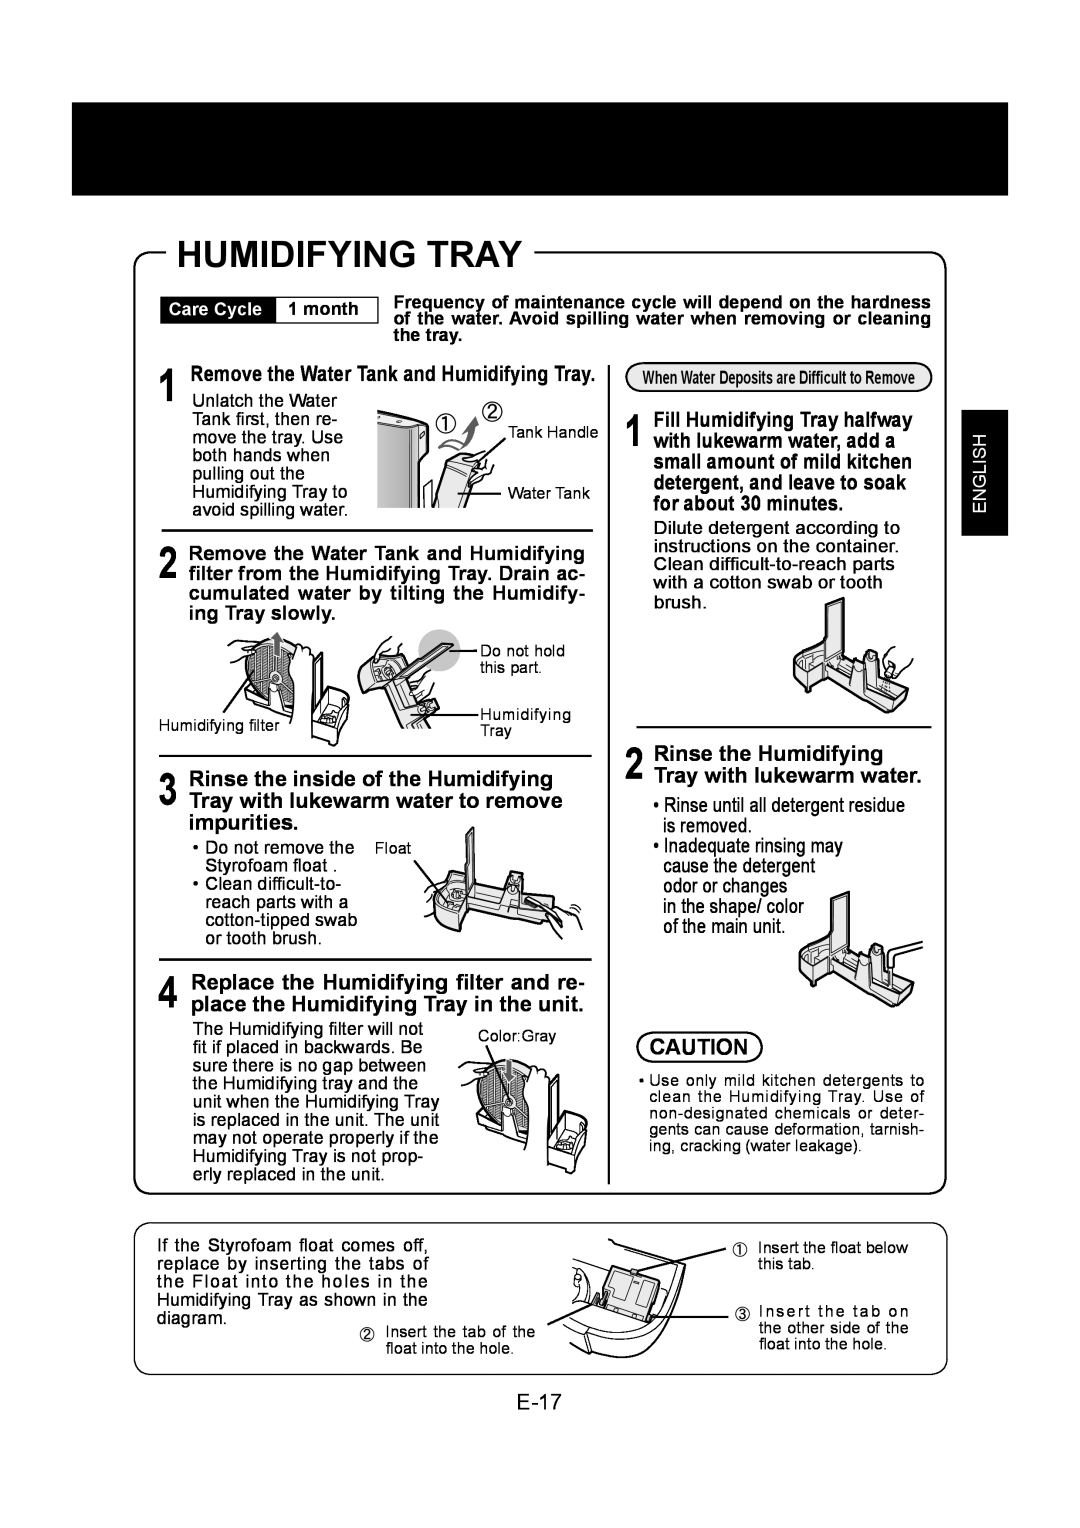 Sharp KC-860U operation manual Rinse the Humidifying Tray with lukewarm water 